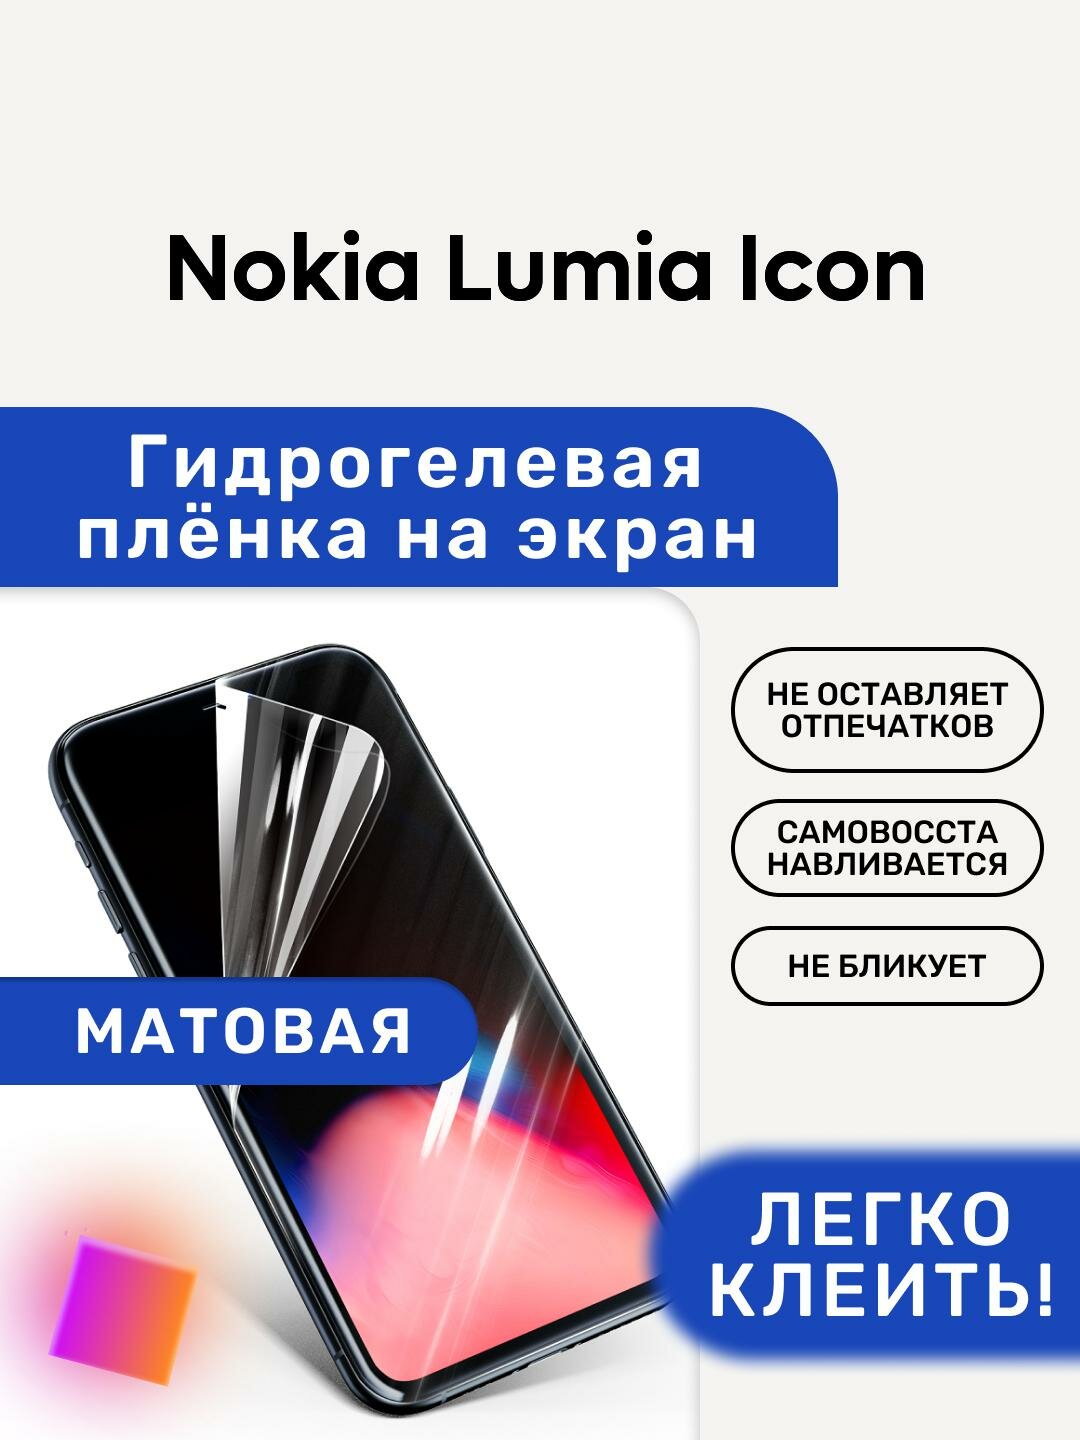 Матовая Гидрогелевая плёнка, полиуретановая, защита экрана Nokia Lumia Icon